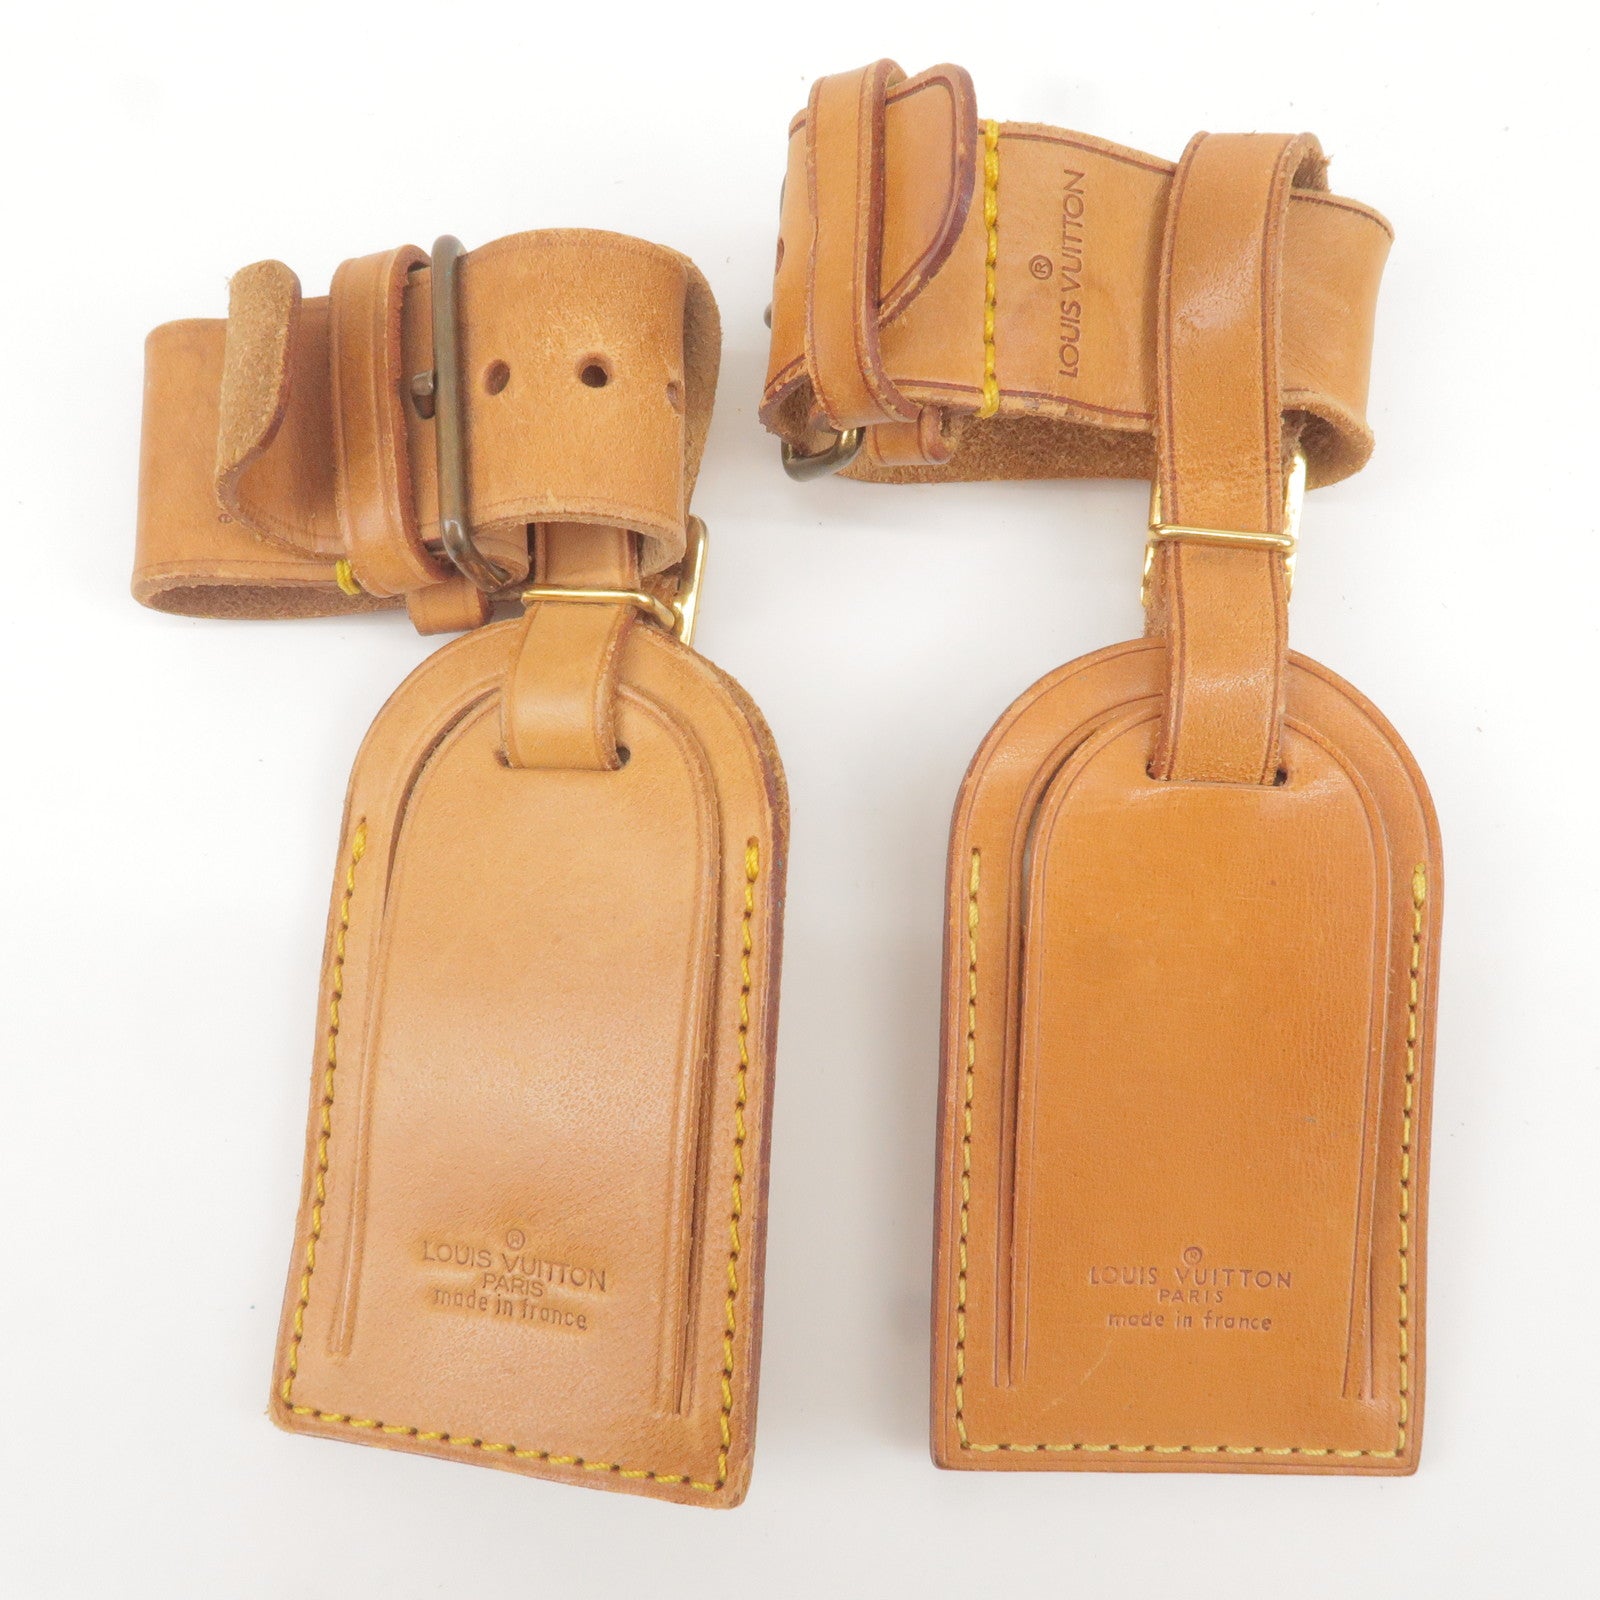 Louis Vuitton Malletier A Pars Empty LV wallet belt bag jewellery